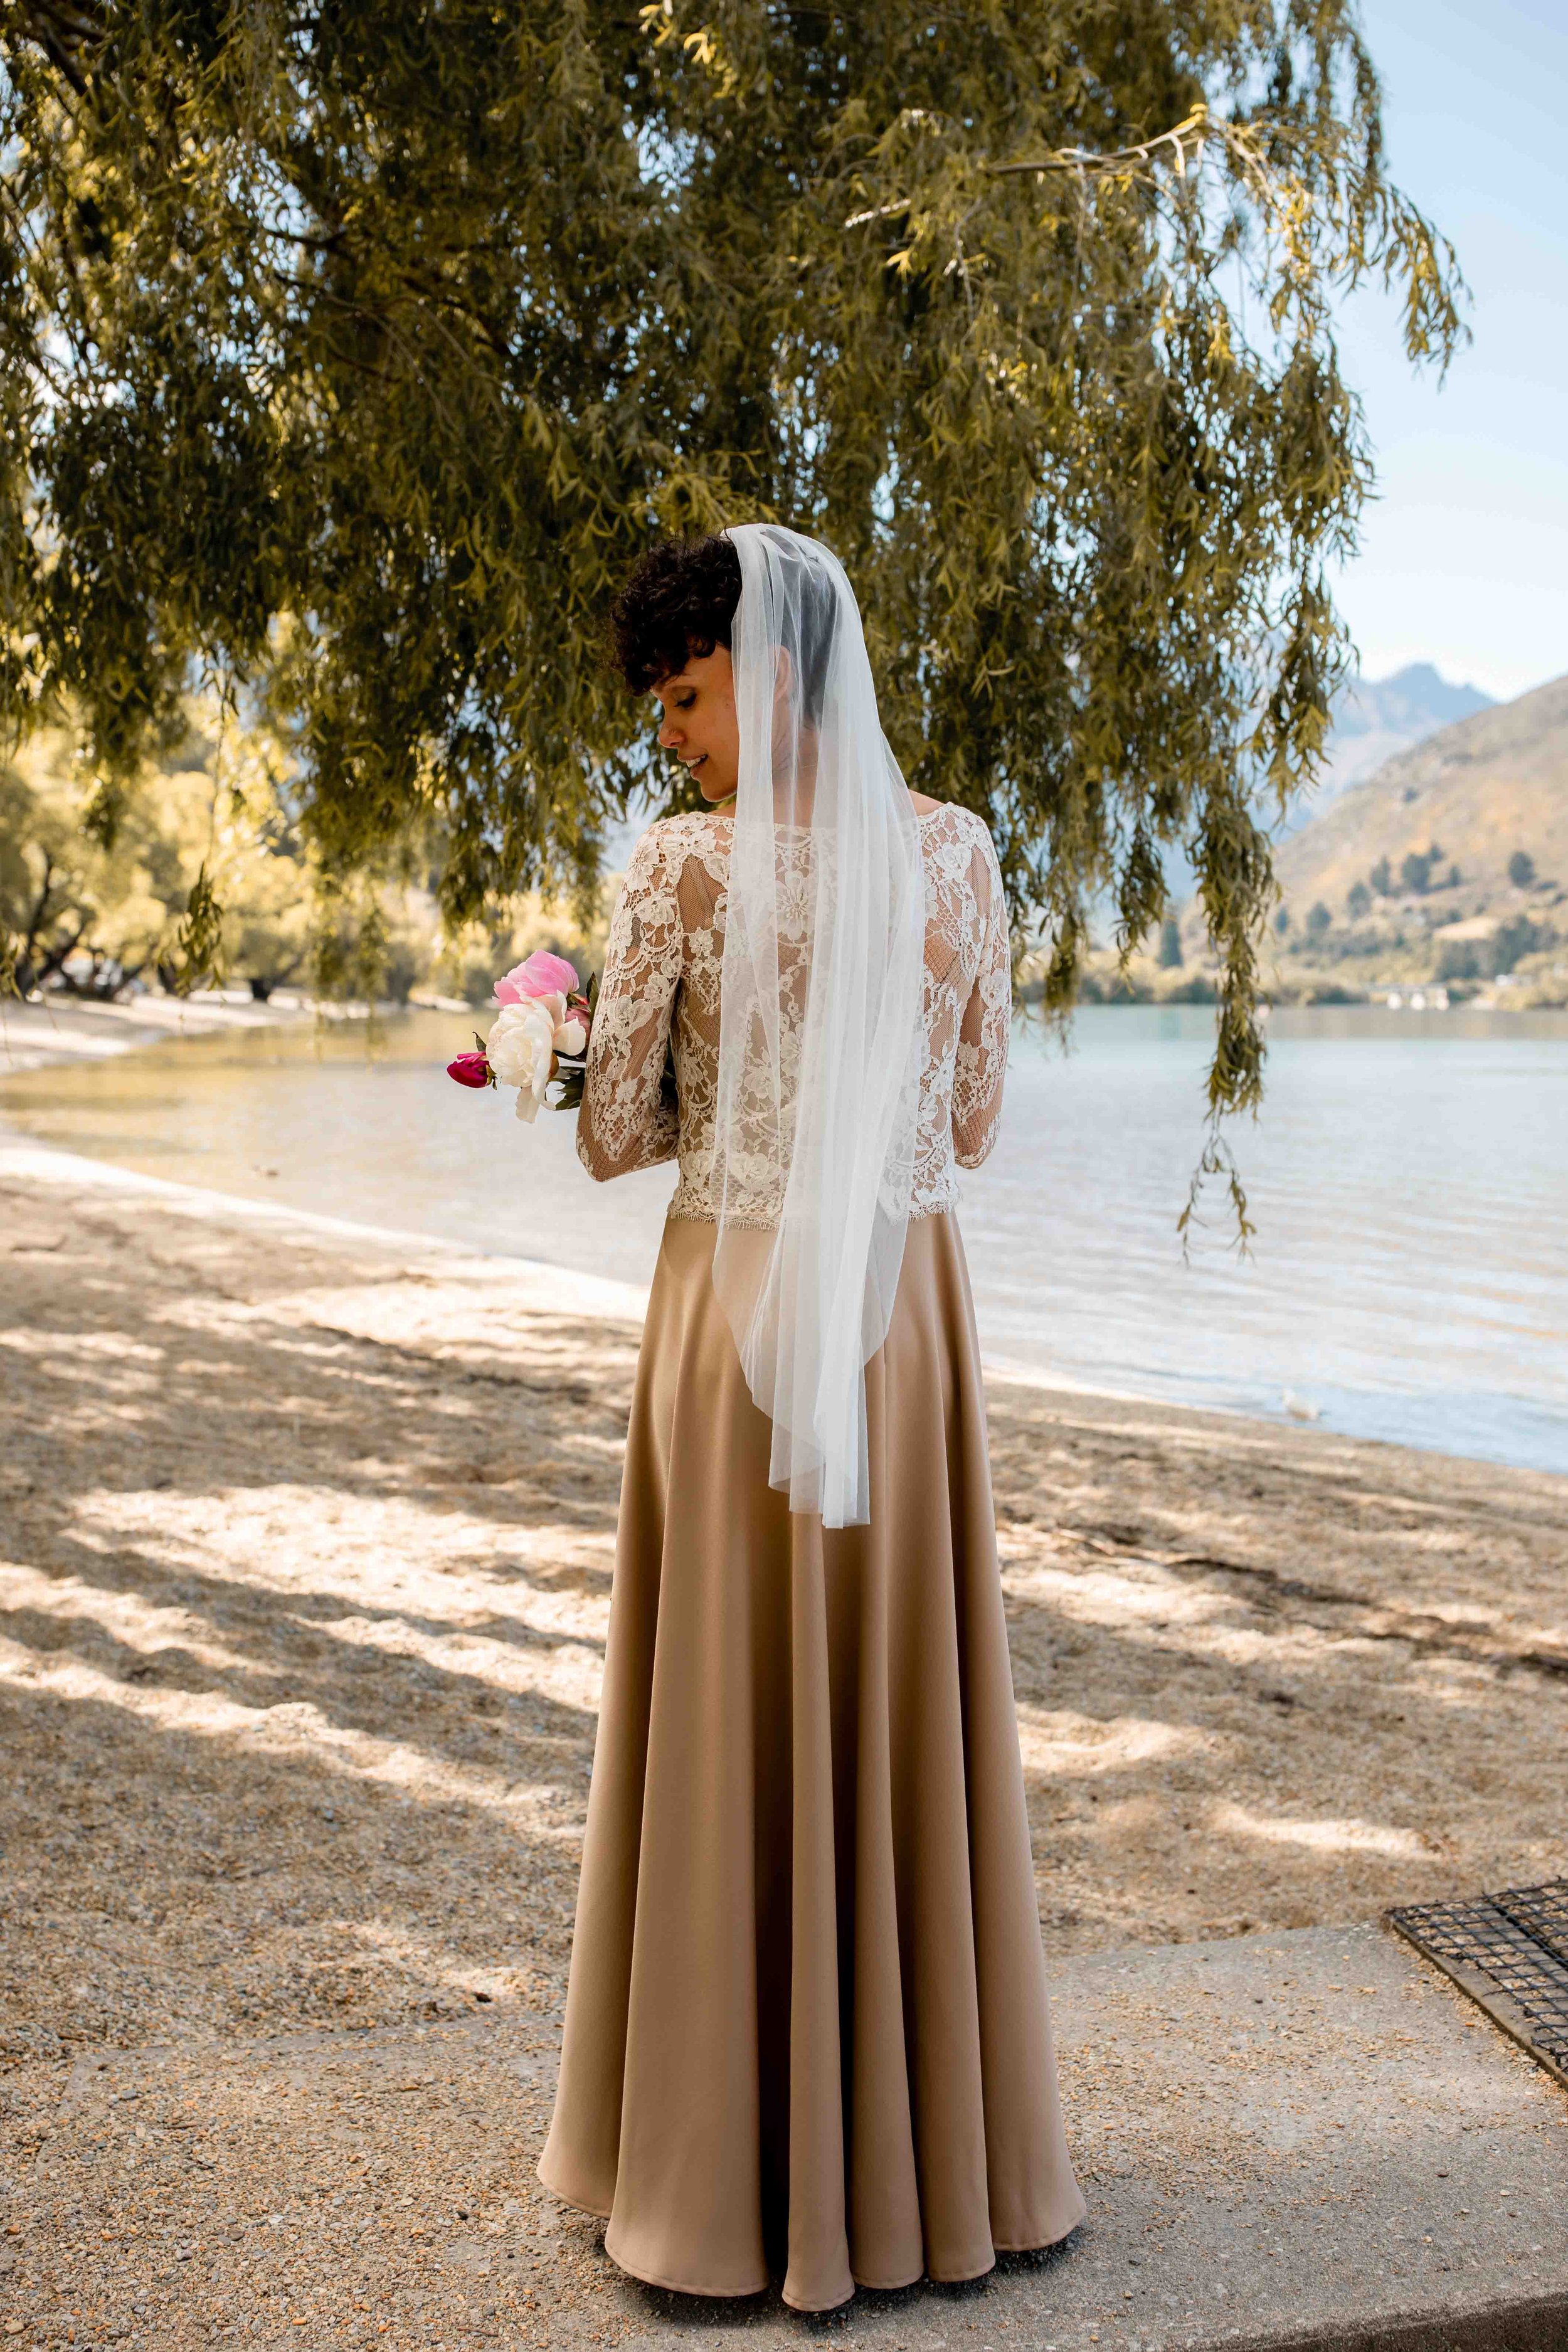 Xena Dress + Stevie Top + Veil 20 - Nemo Bridal Couture Queenstown New Zealand 0V9A2632.jpg